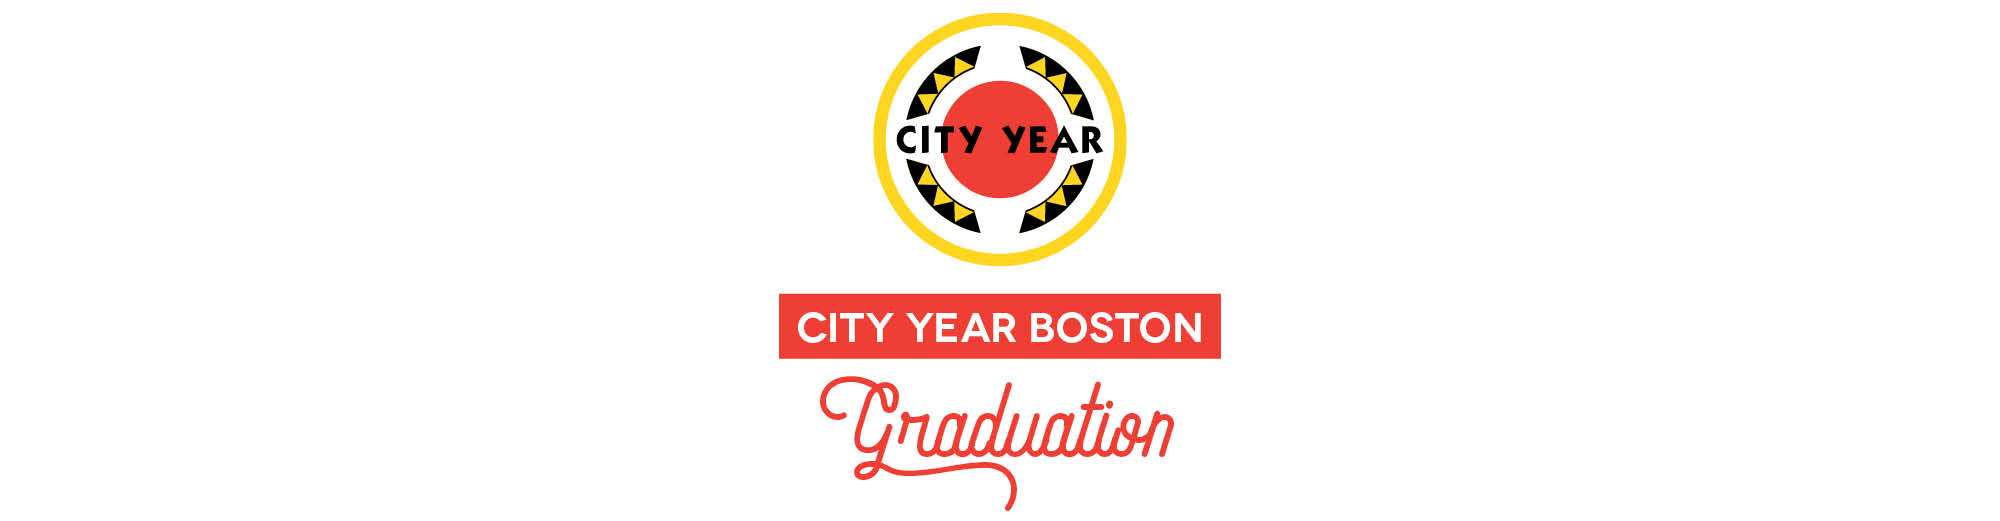 City Year Boston Virtual Graduation 2020